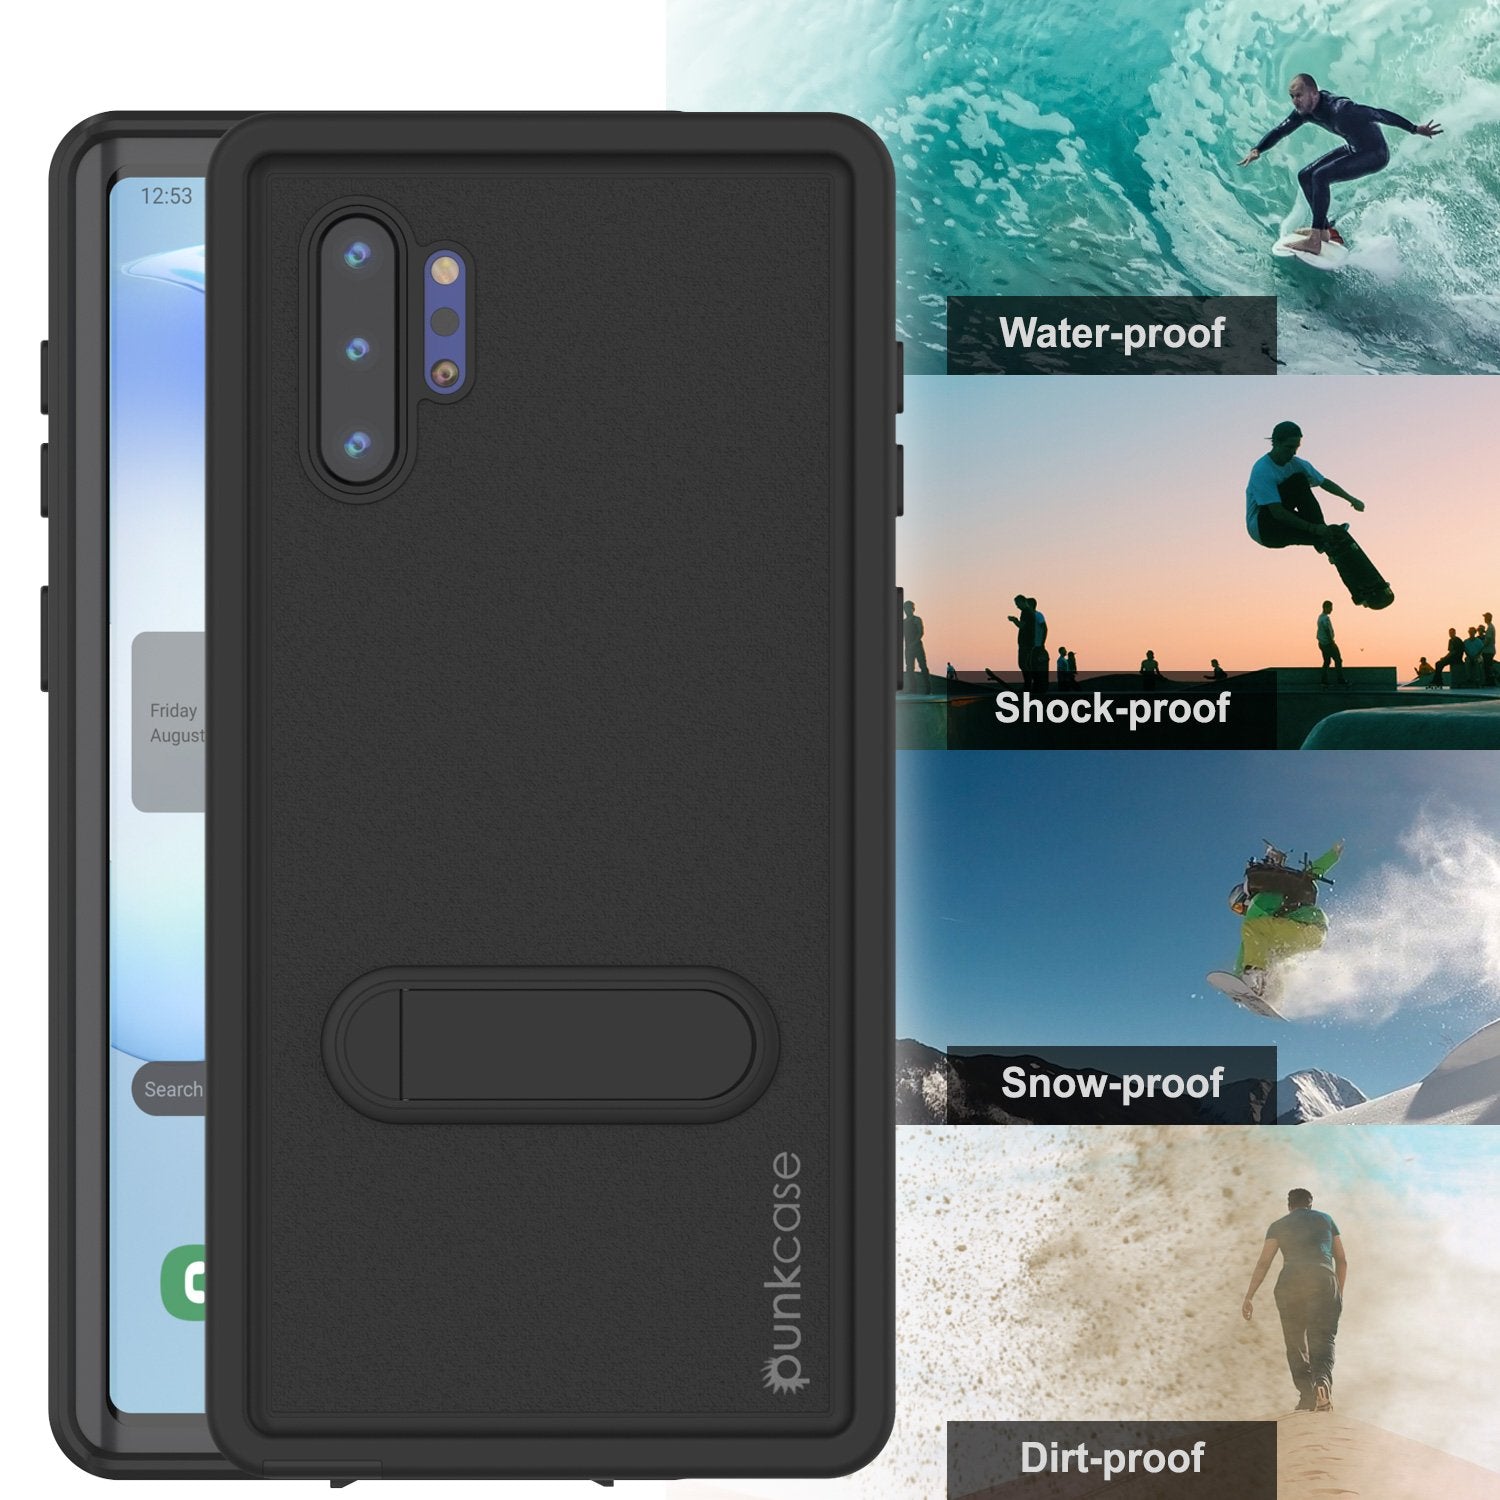 PunkCase Galaxy Note 10+ Plus Waterproof Case, [KickStud Series] Armor Cover [Black]